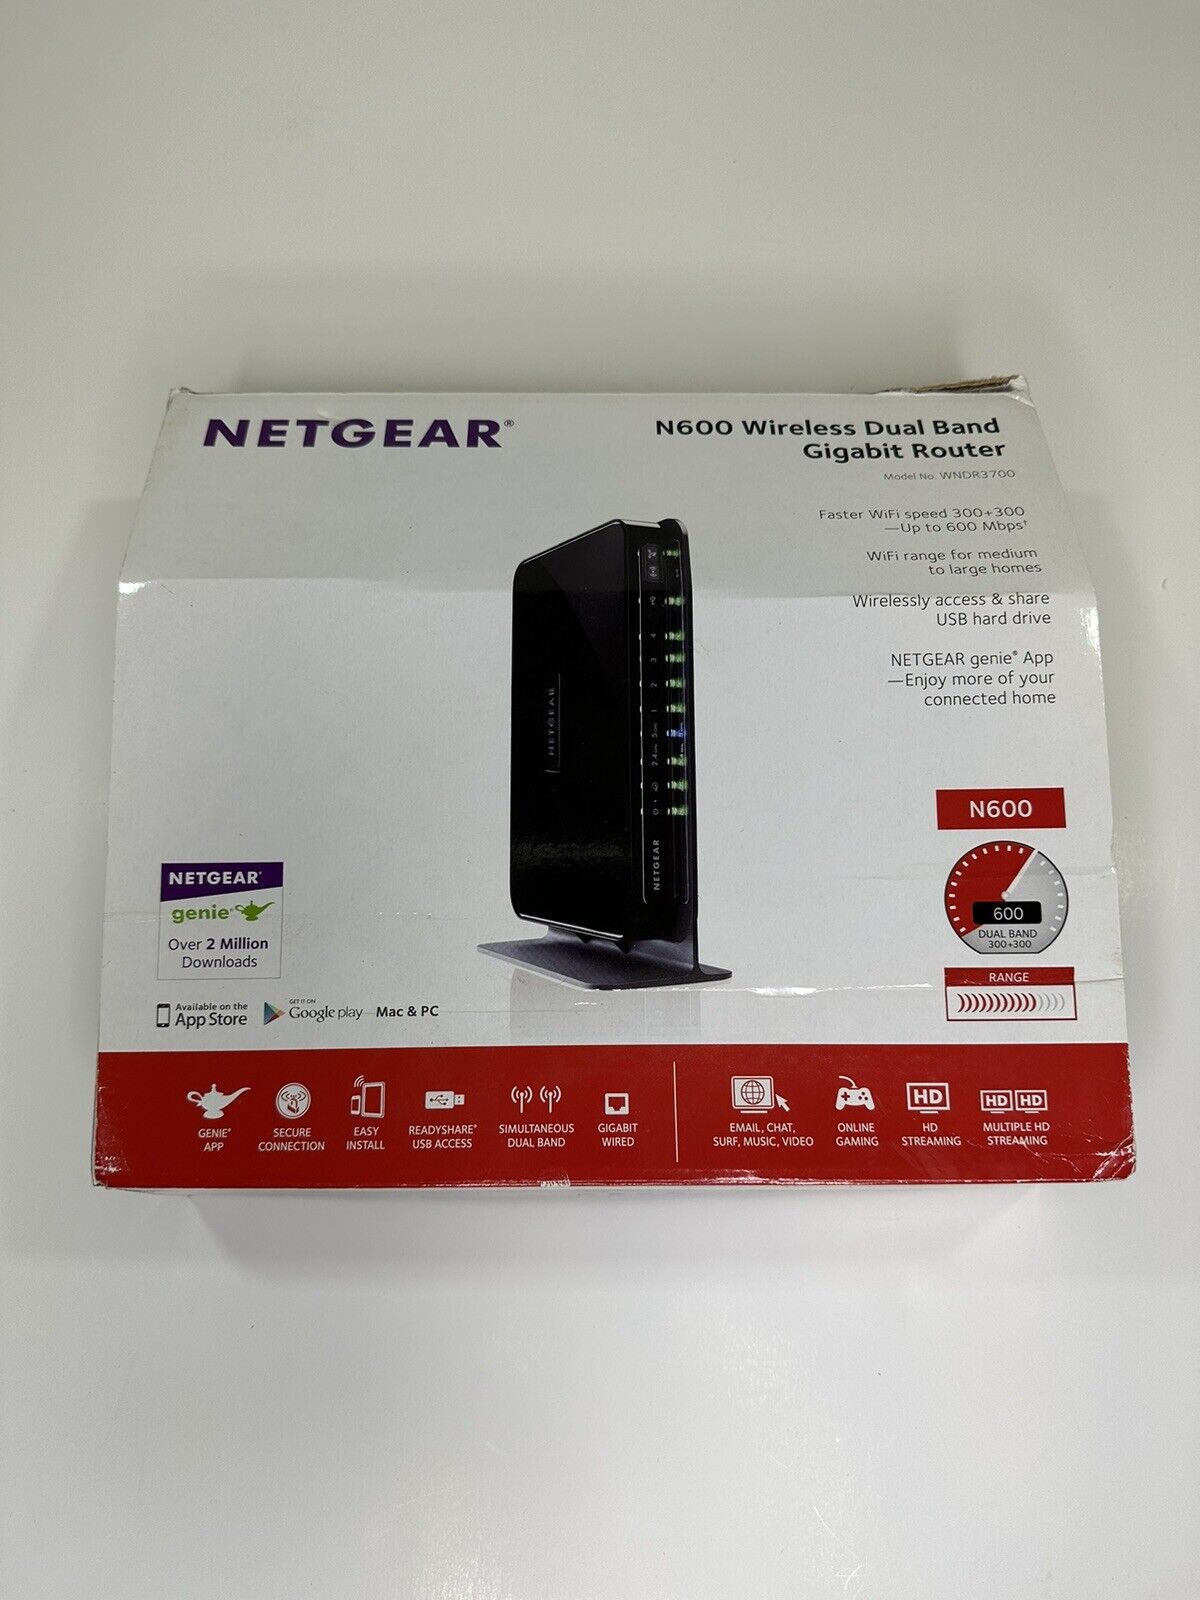 NETGEAR N600 Wireless Dual band gigabit Router. Model No. WNDR 3700. Tested